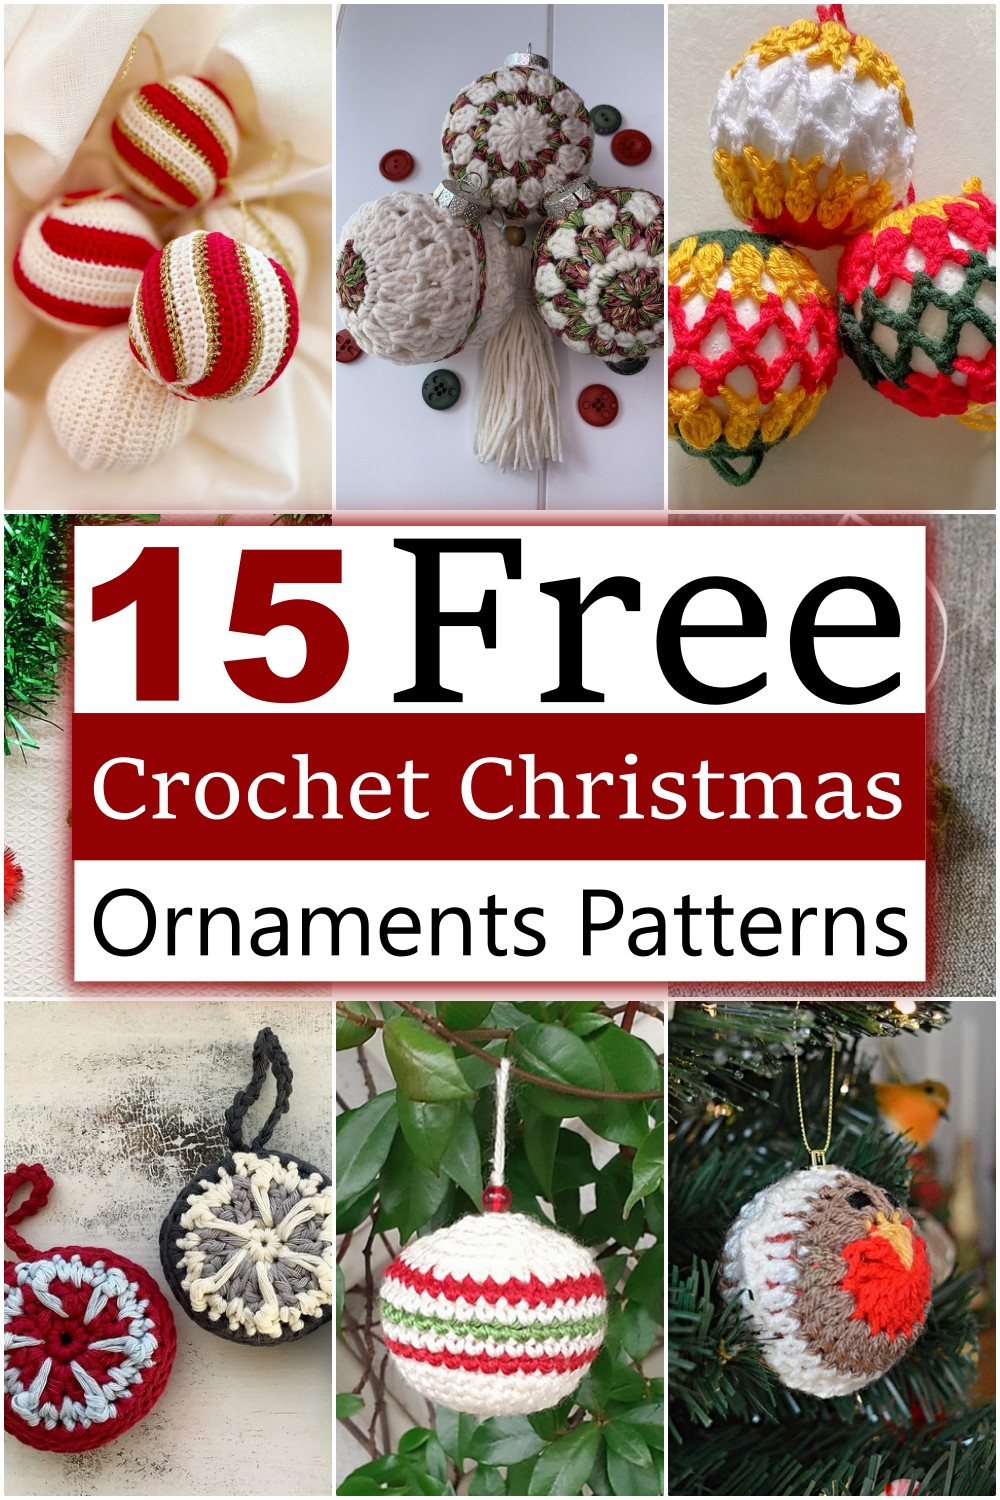 Crochet Christmas Ornaments Patterns